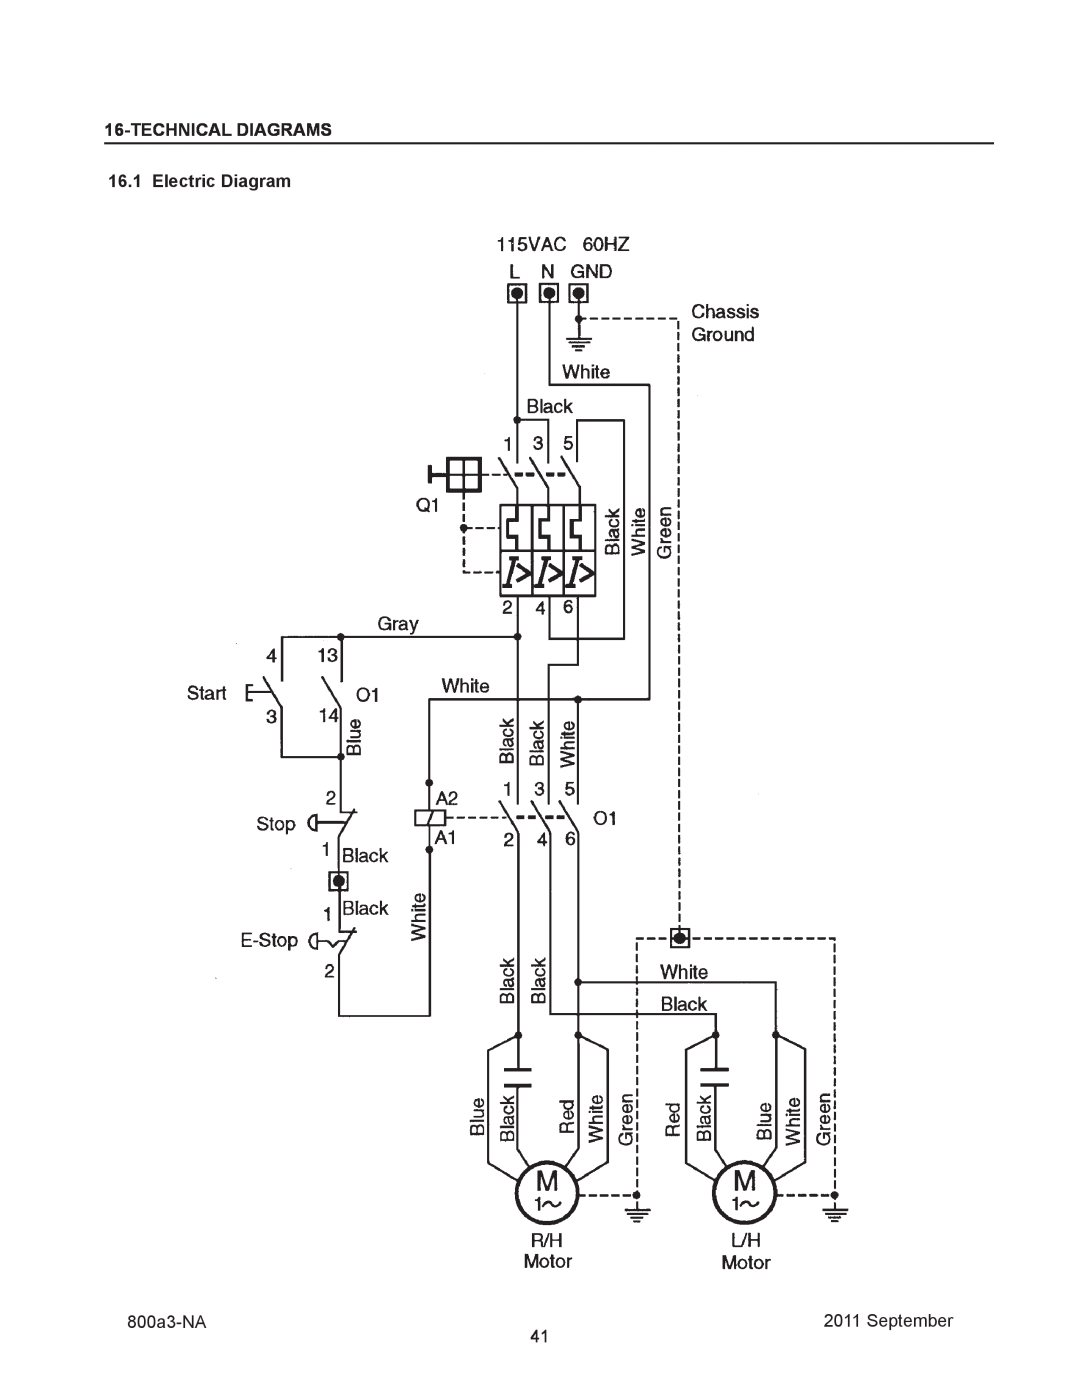 3M manual TECHNICALDIAGRAMS 16.1 Electric Diagram, 800a3-NA, September 